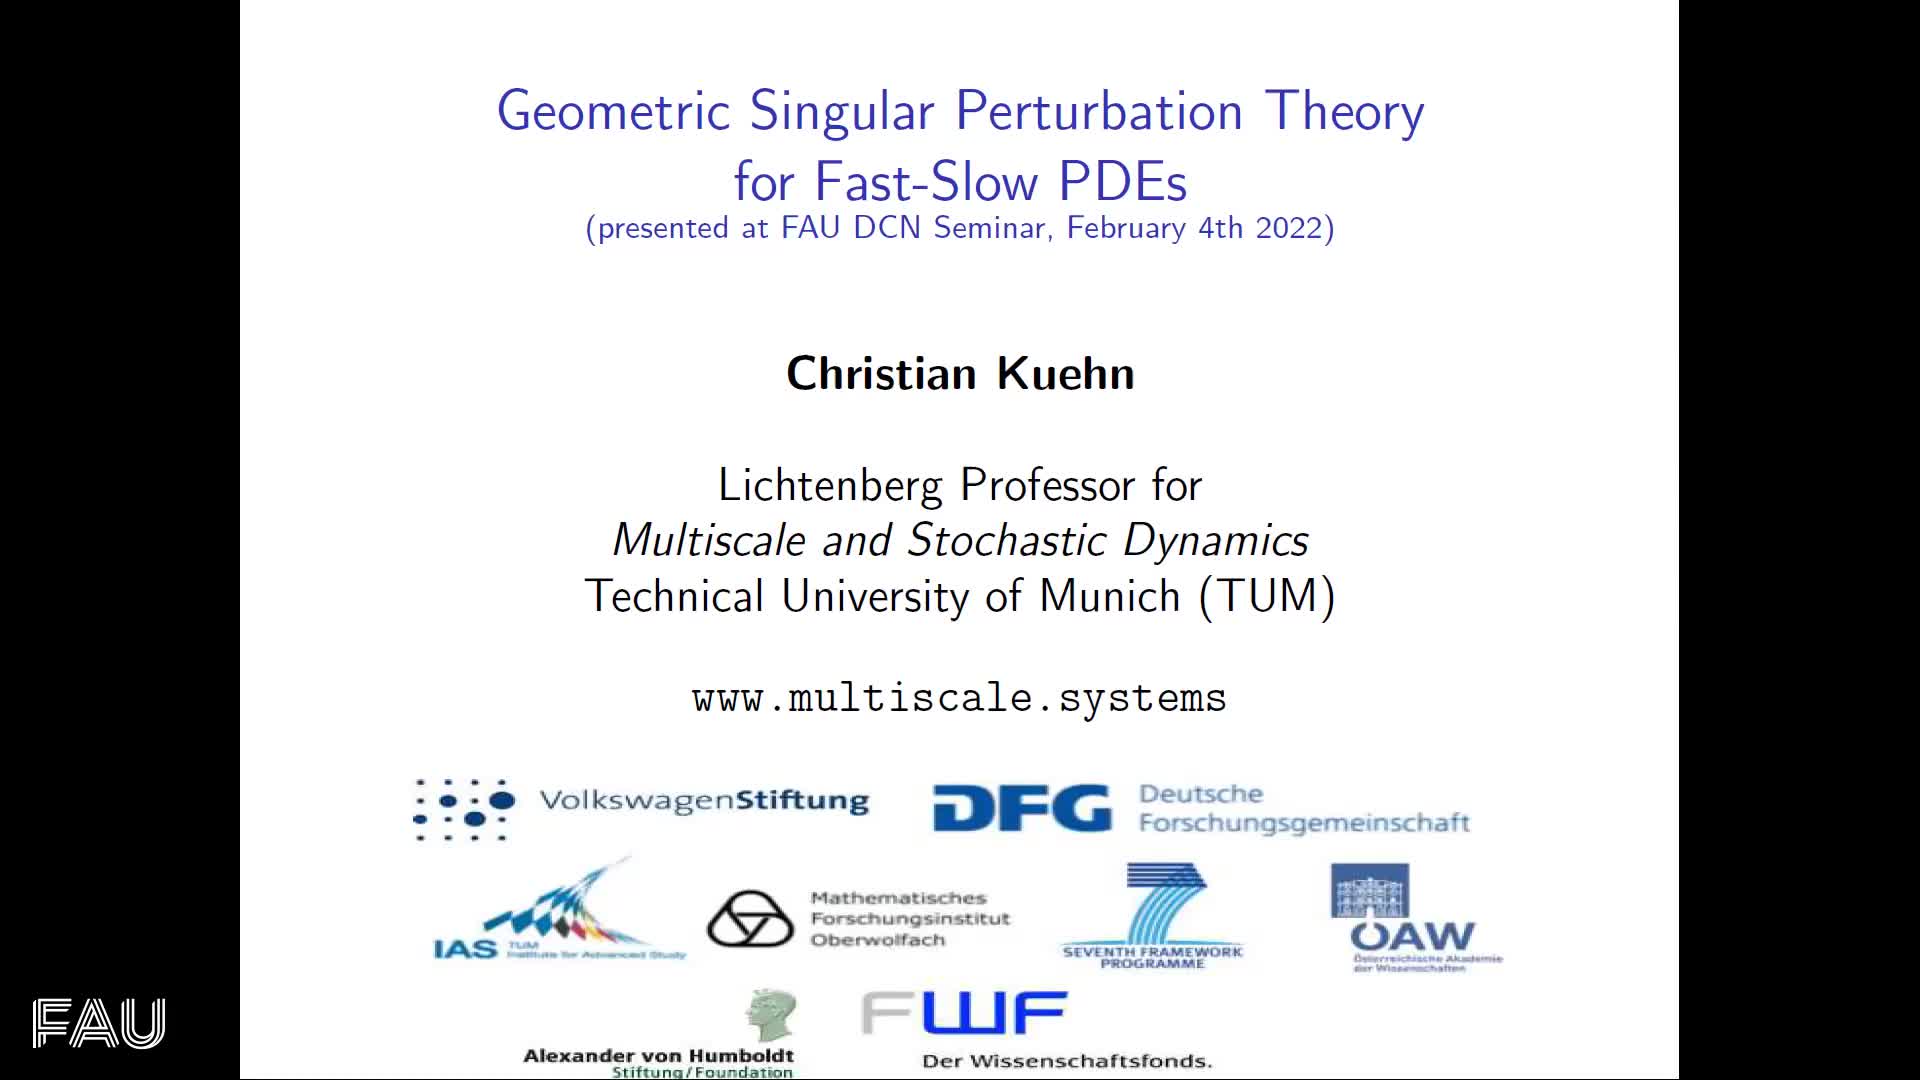 GSPT for Fast-Slow PDEs (C. Kuehn, TU Munich) preview image